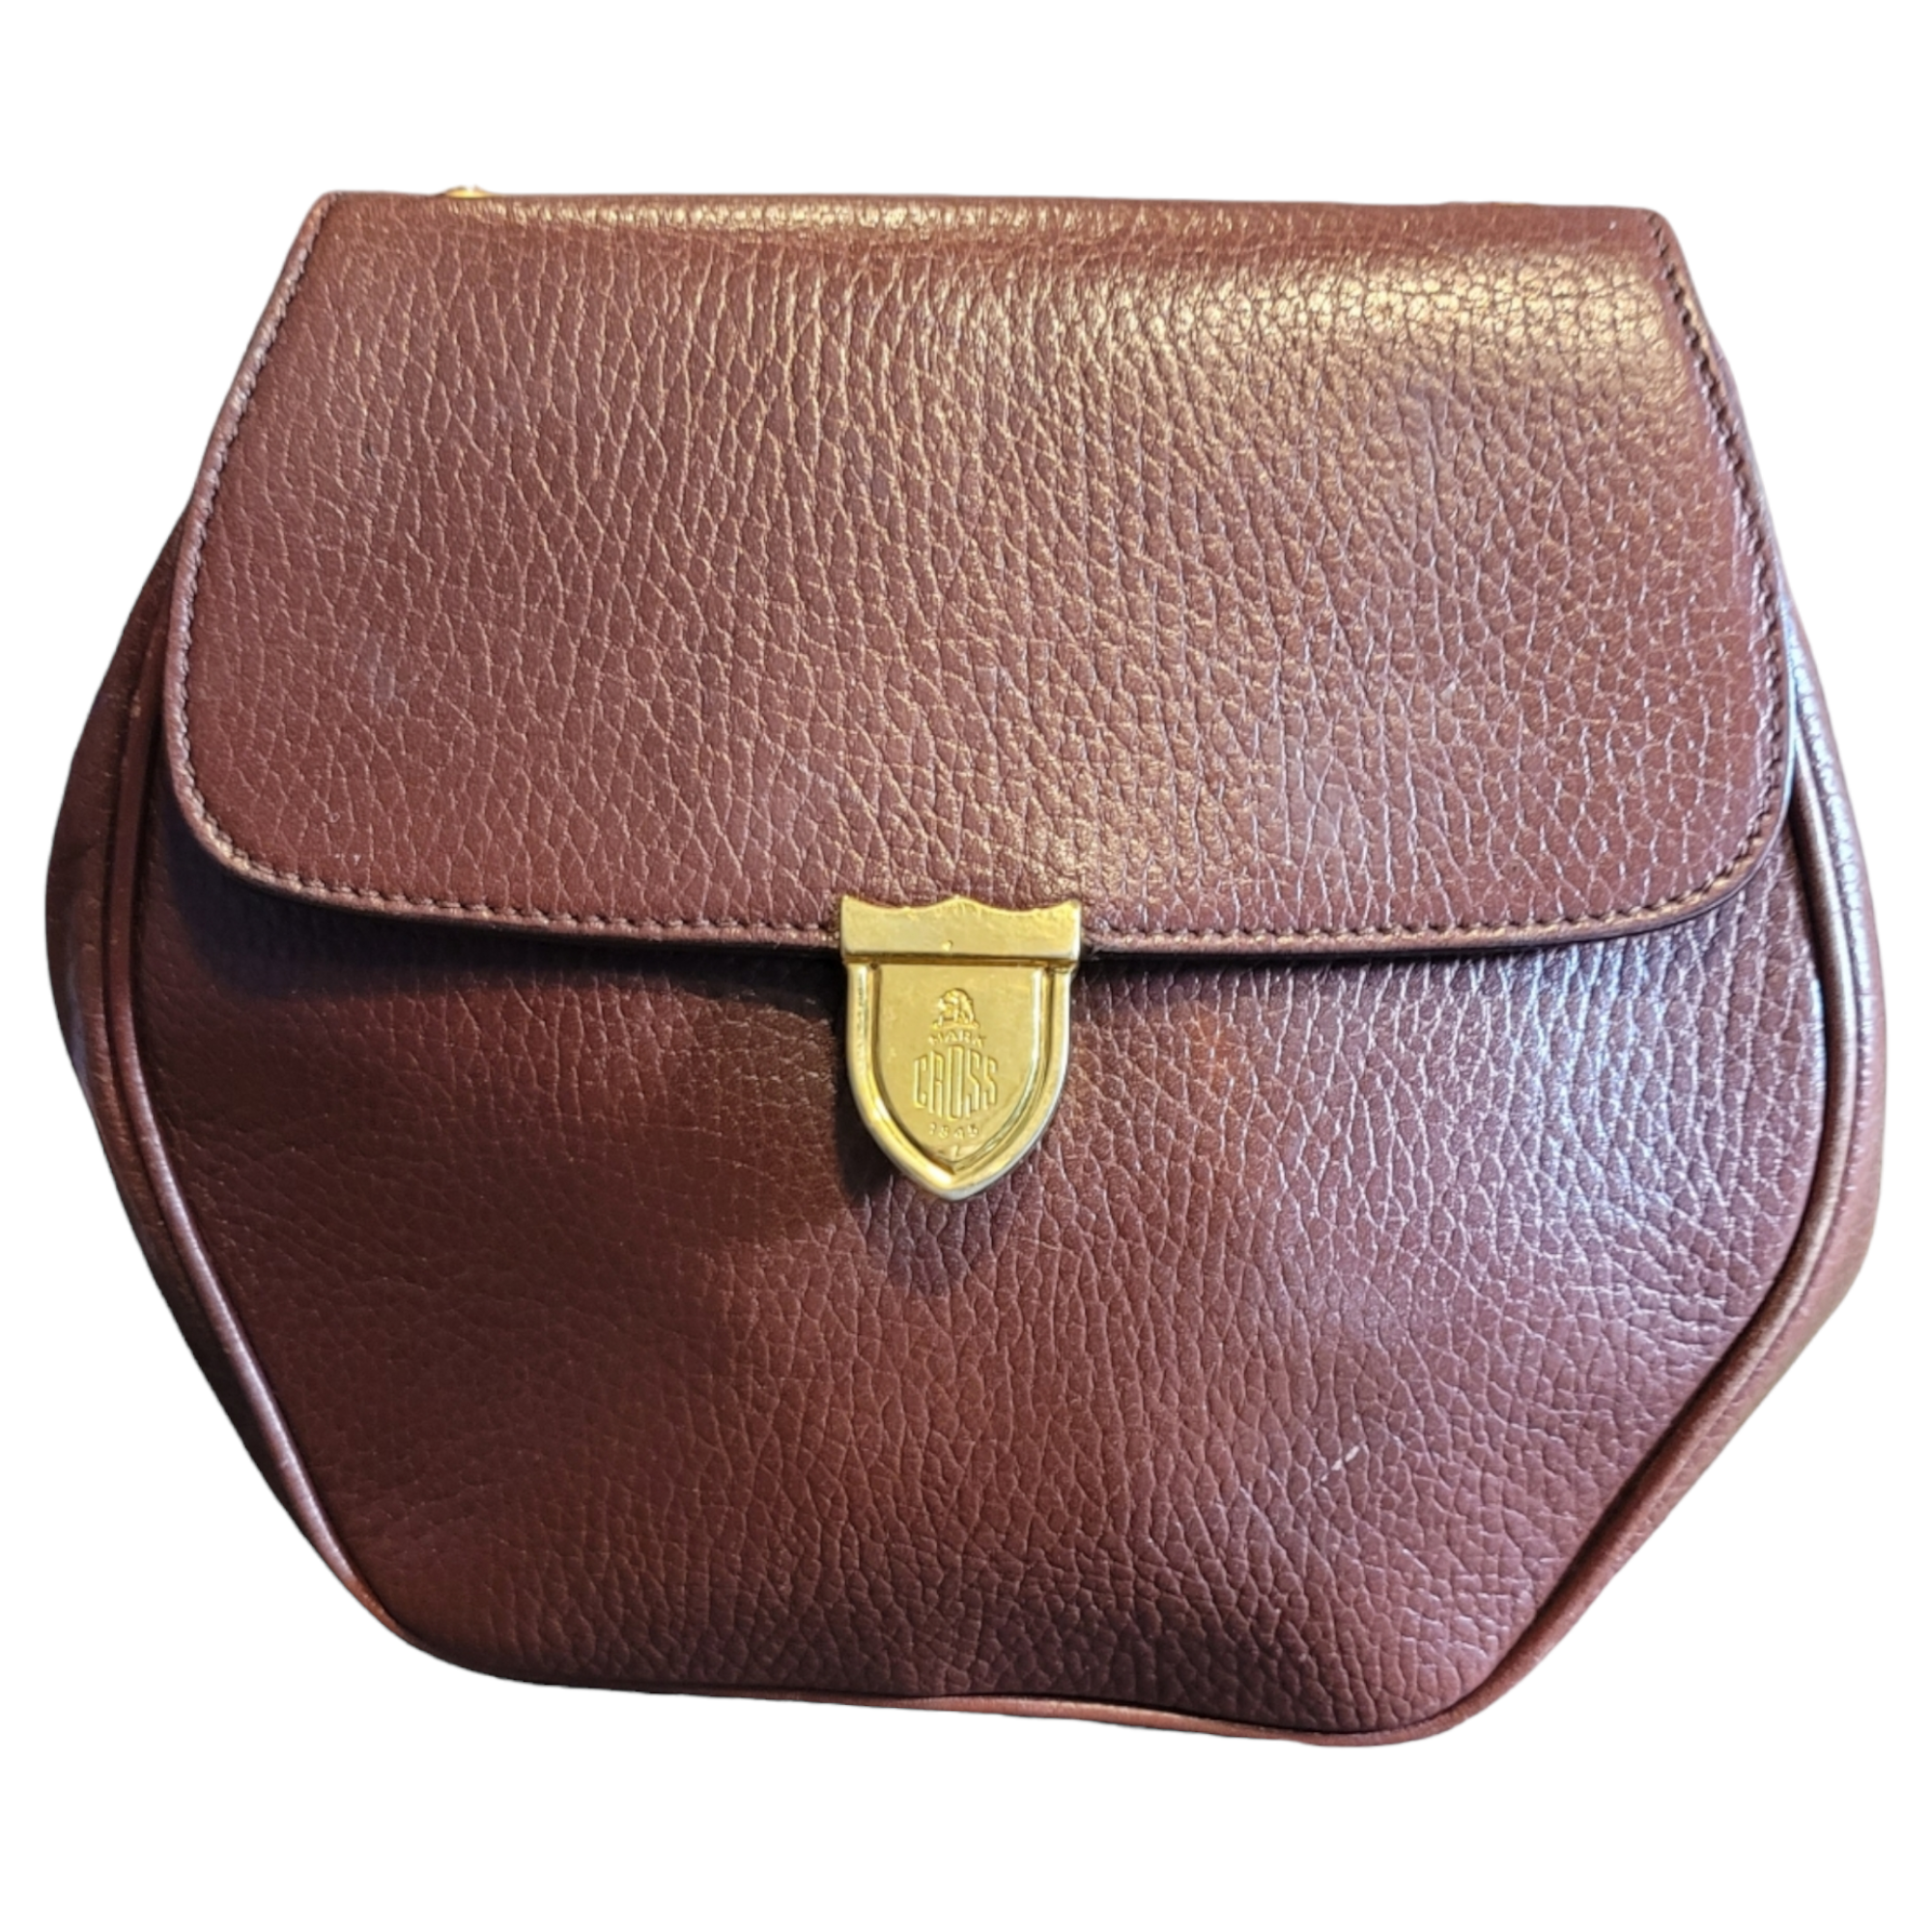 Mark Cross - Your luxury spring handbag sorted | Fashion